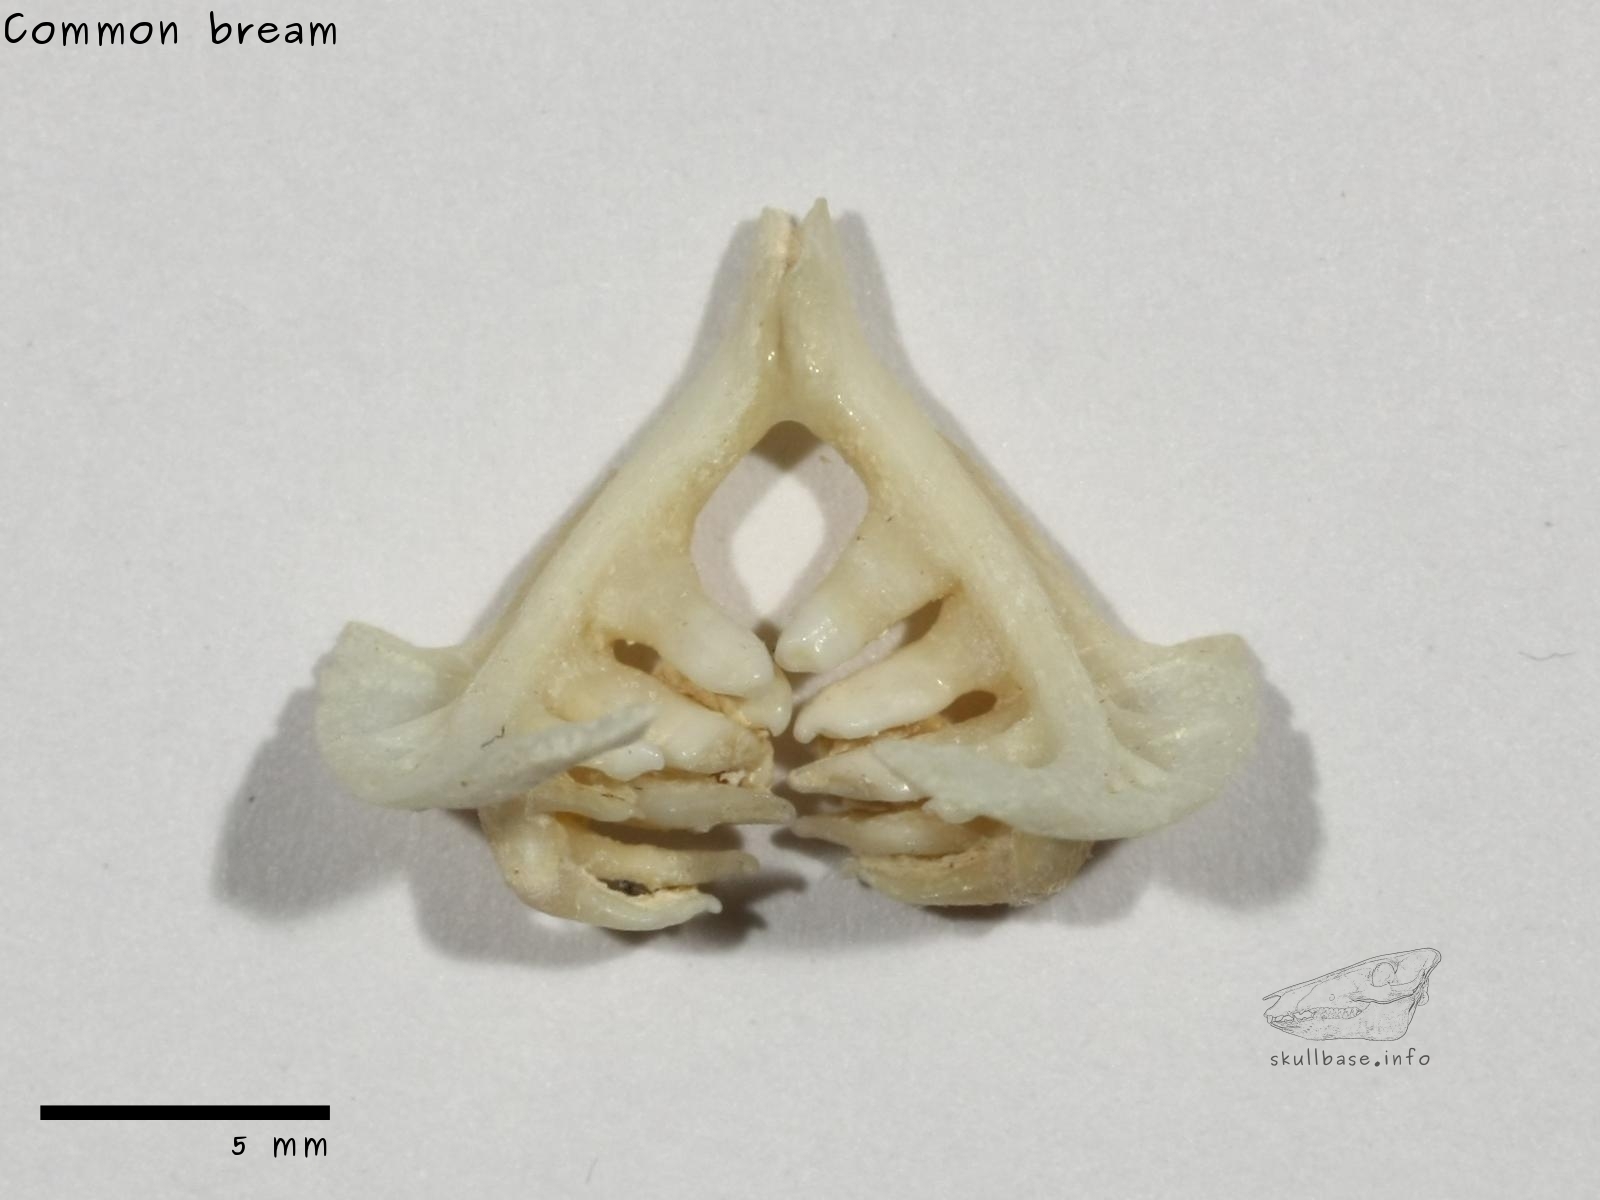 Common bream (Abramis brama) pharyngeal teeth